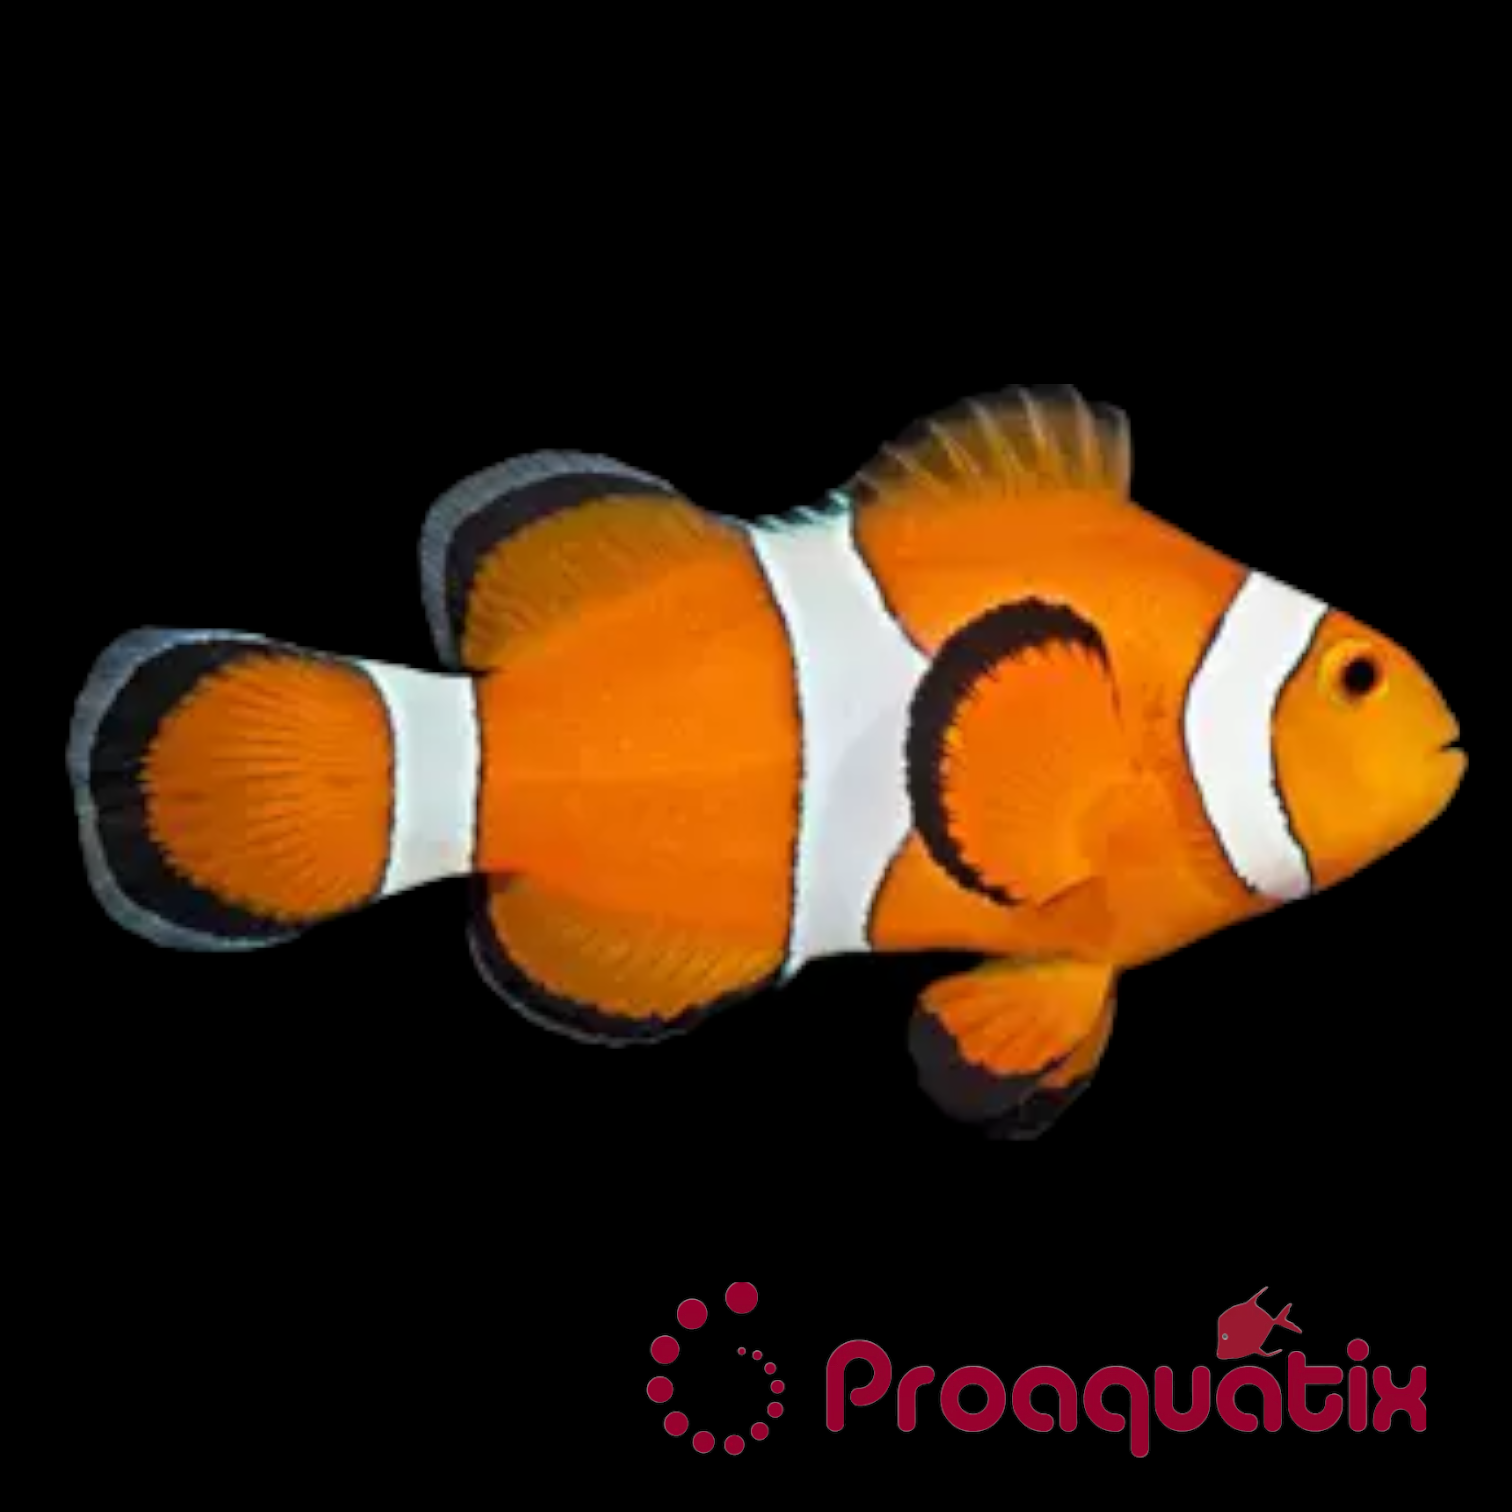 Ocellaris Clownfish (Proaquatix)